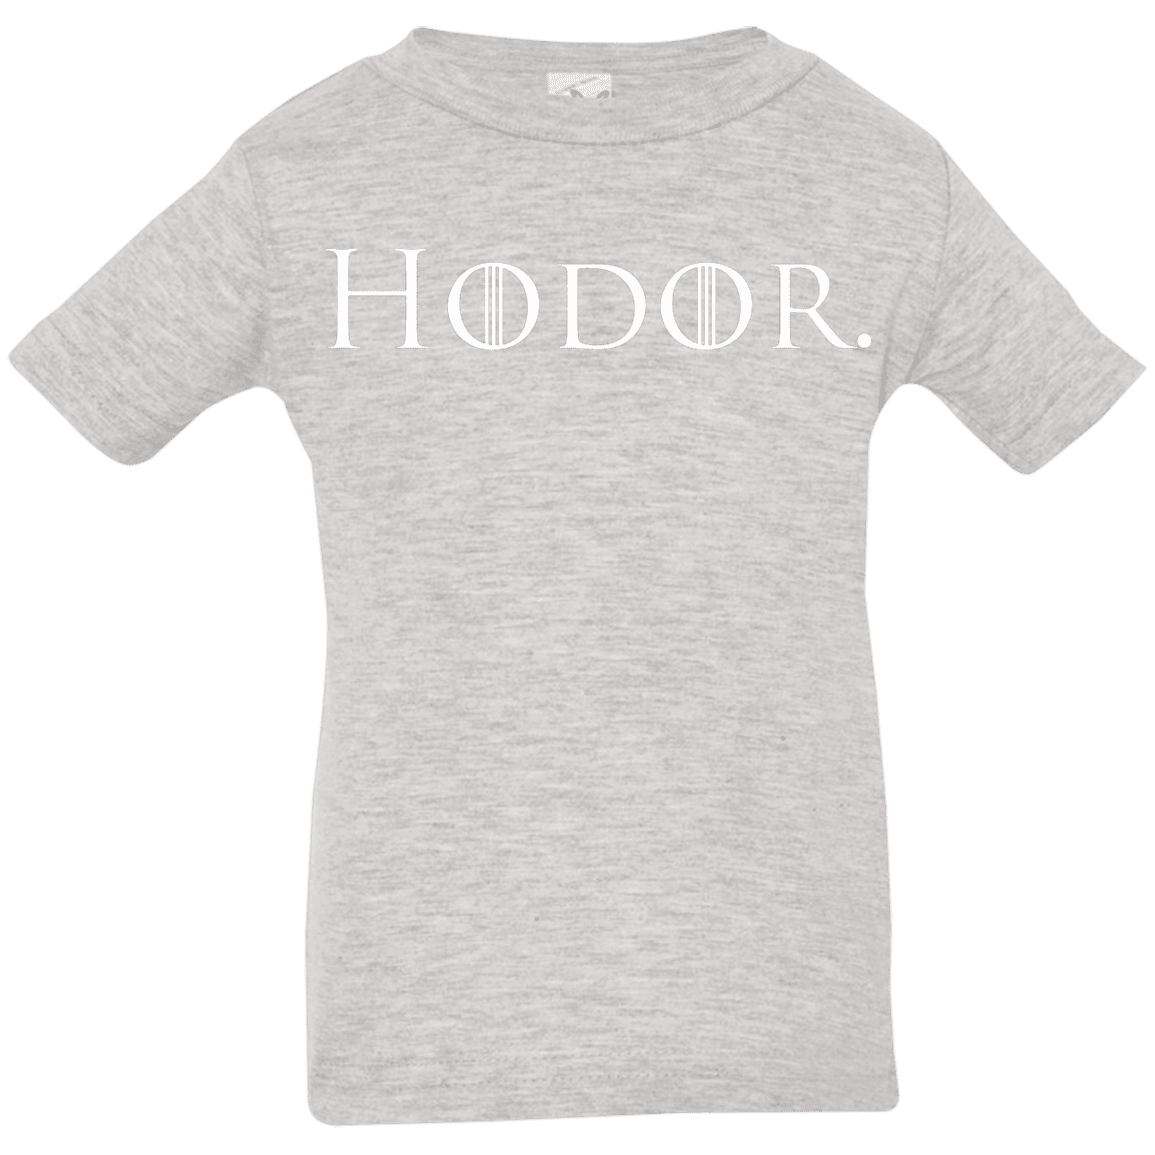 T-Shirts Heather Grey / 6 Months Hodor. Infant Premium T-Shirt